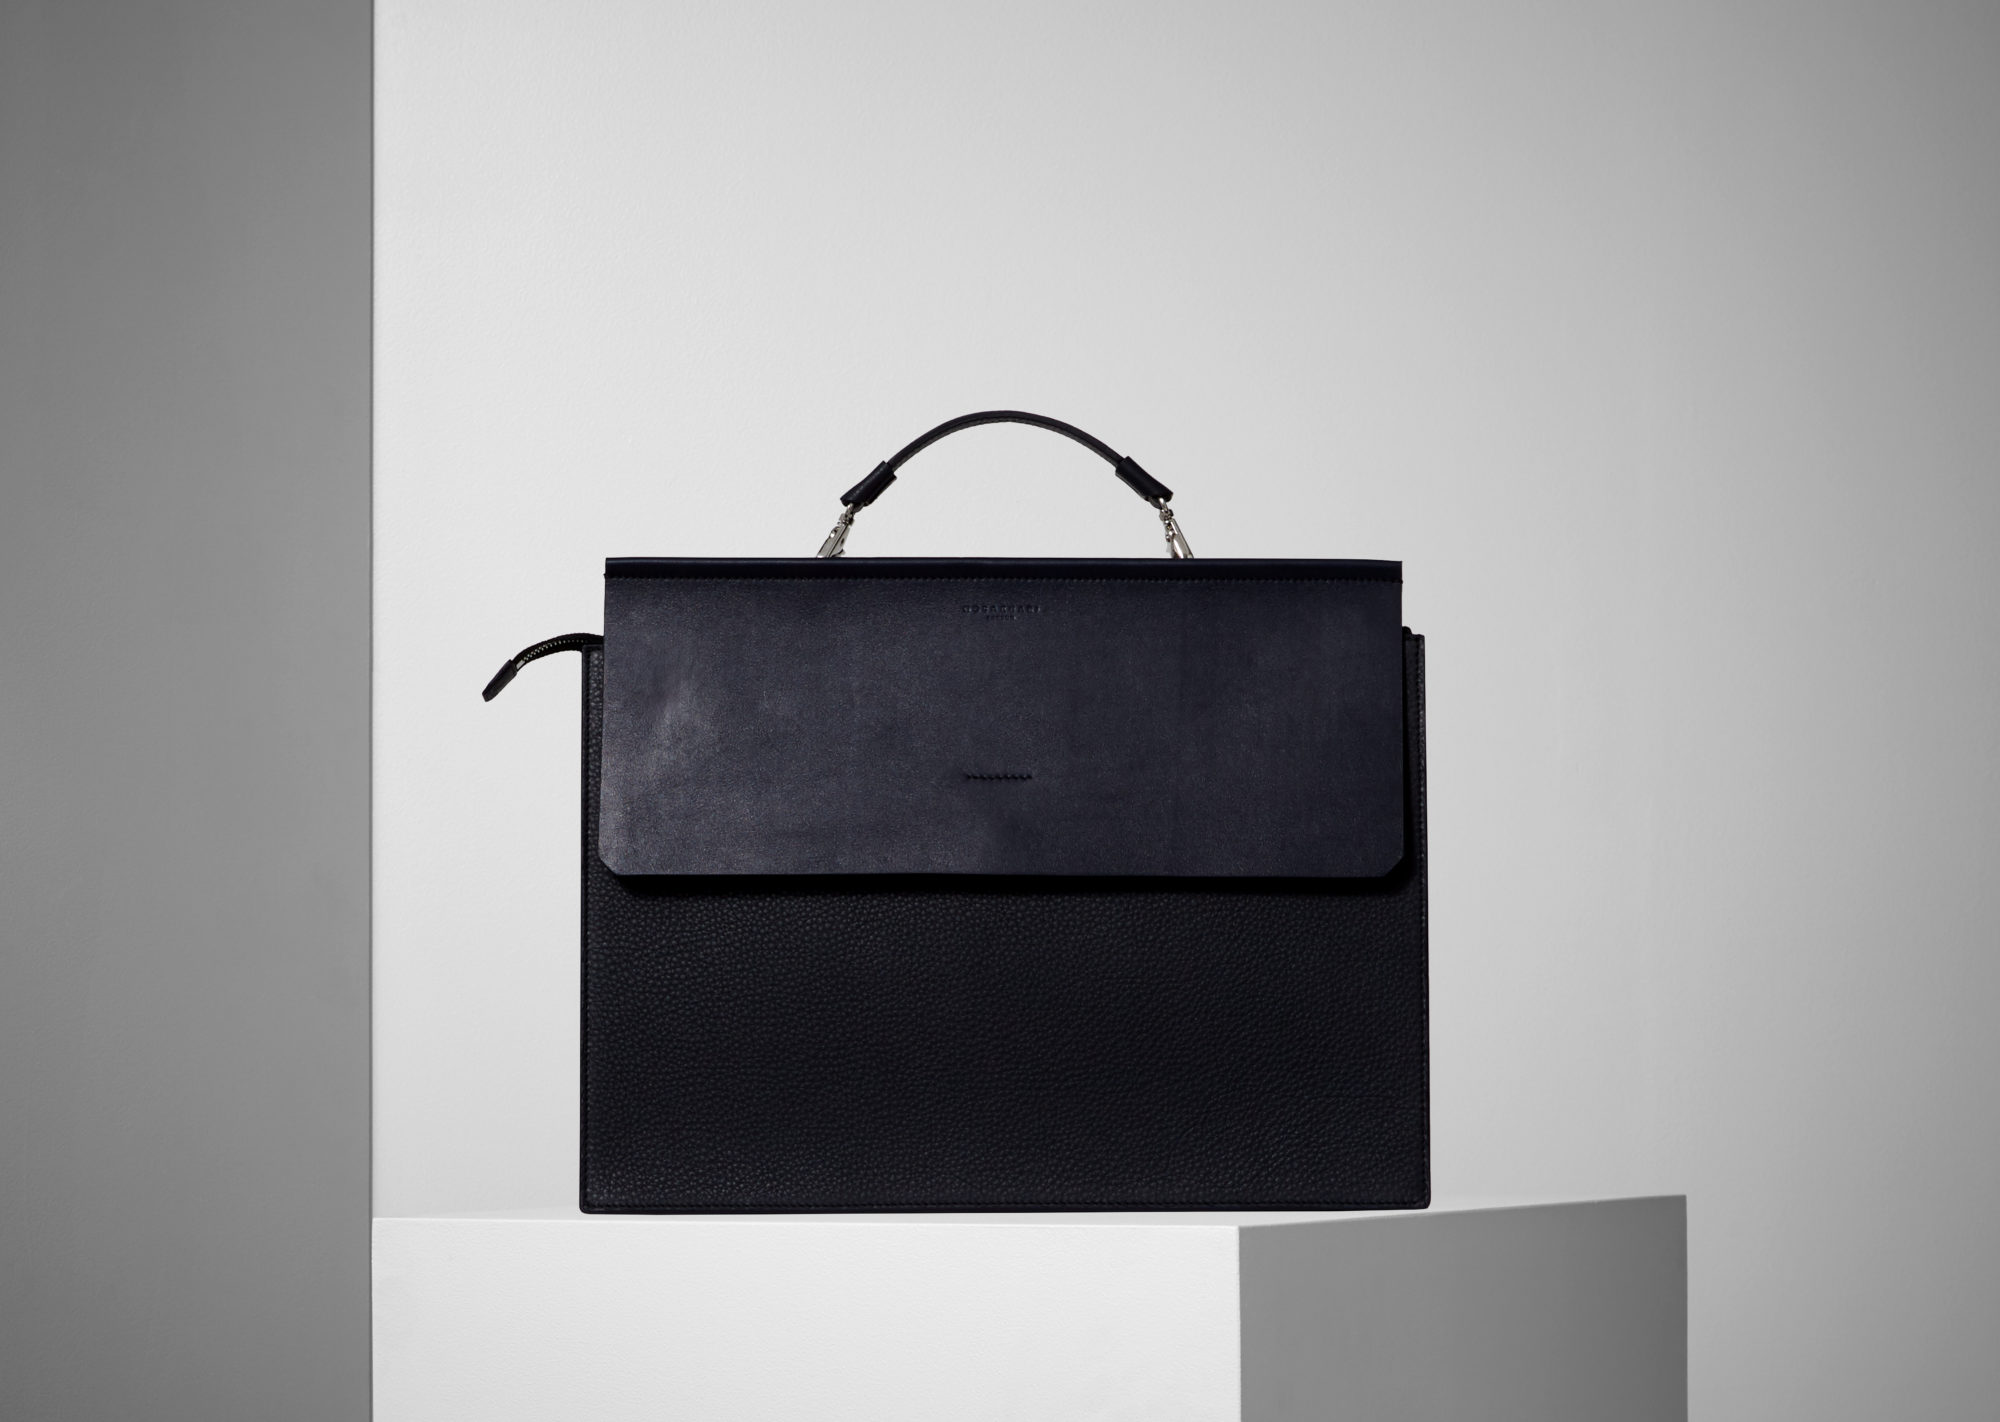 bespoke leather bag by CreateLab